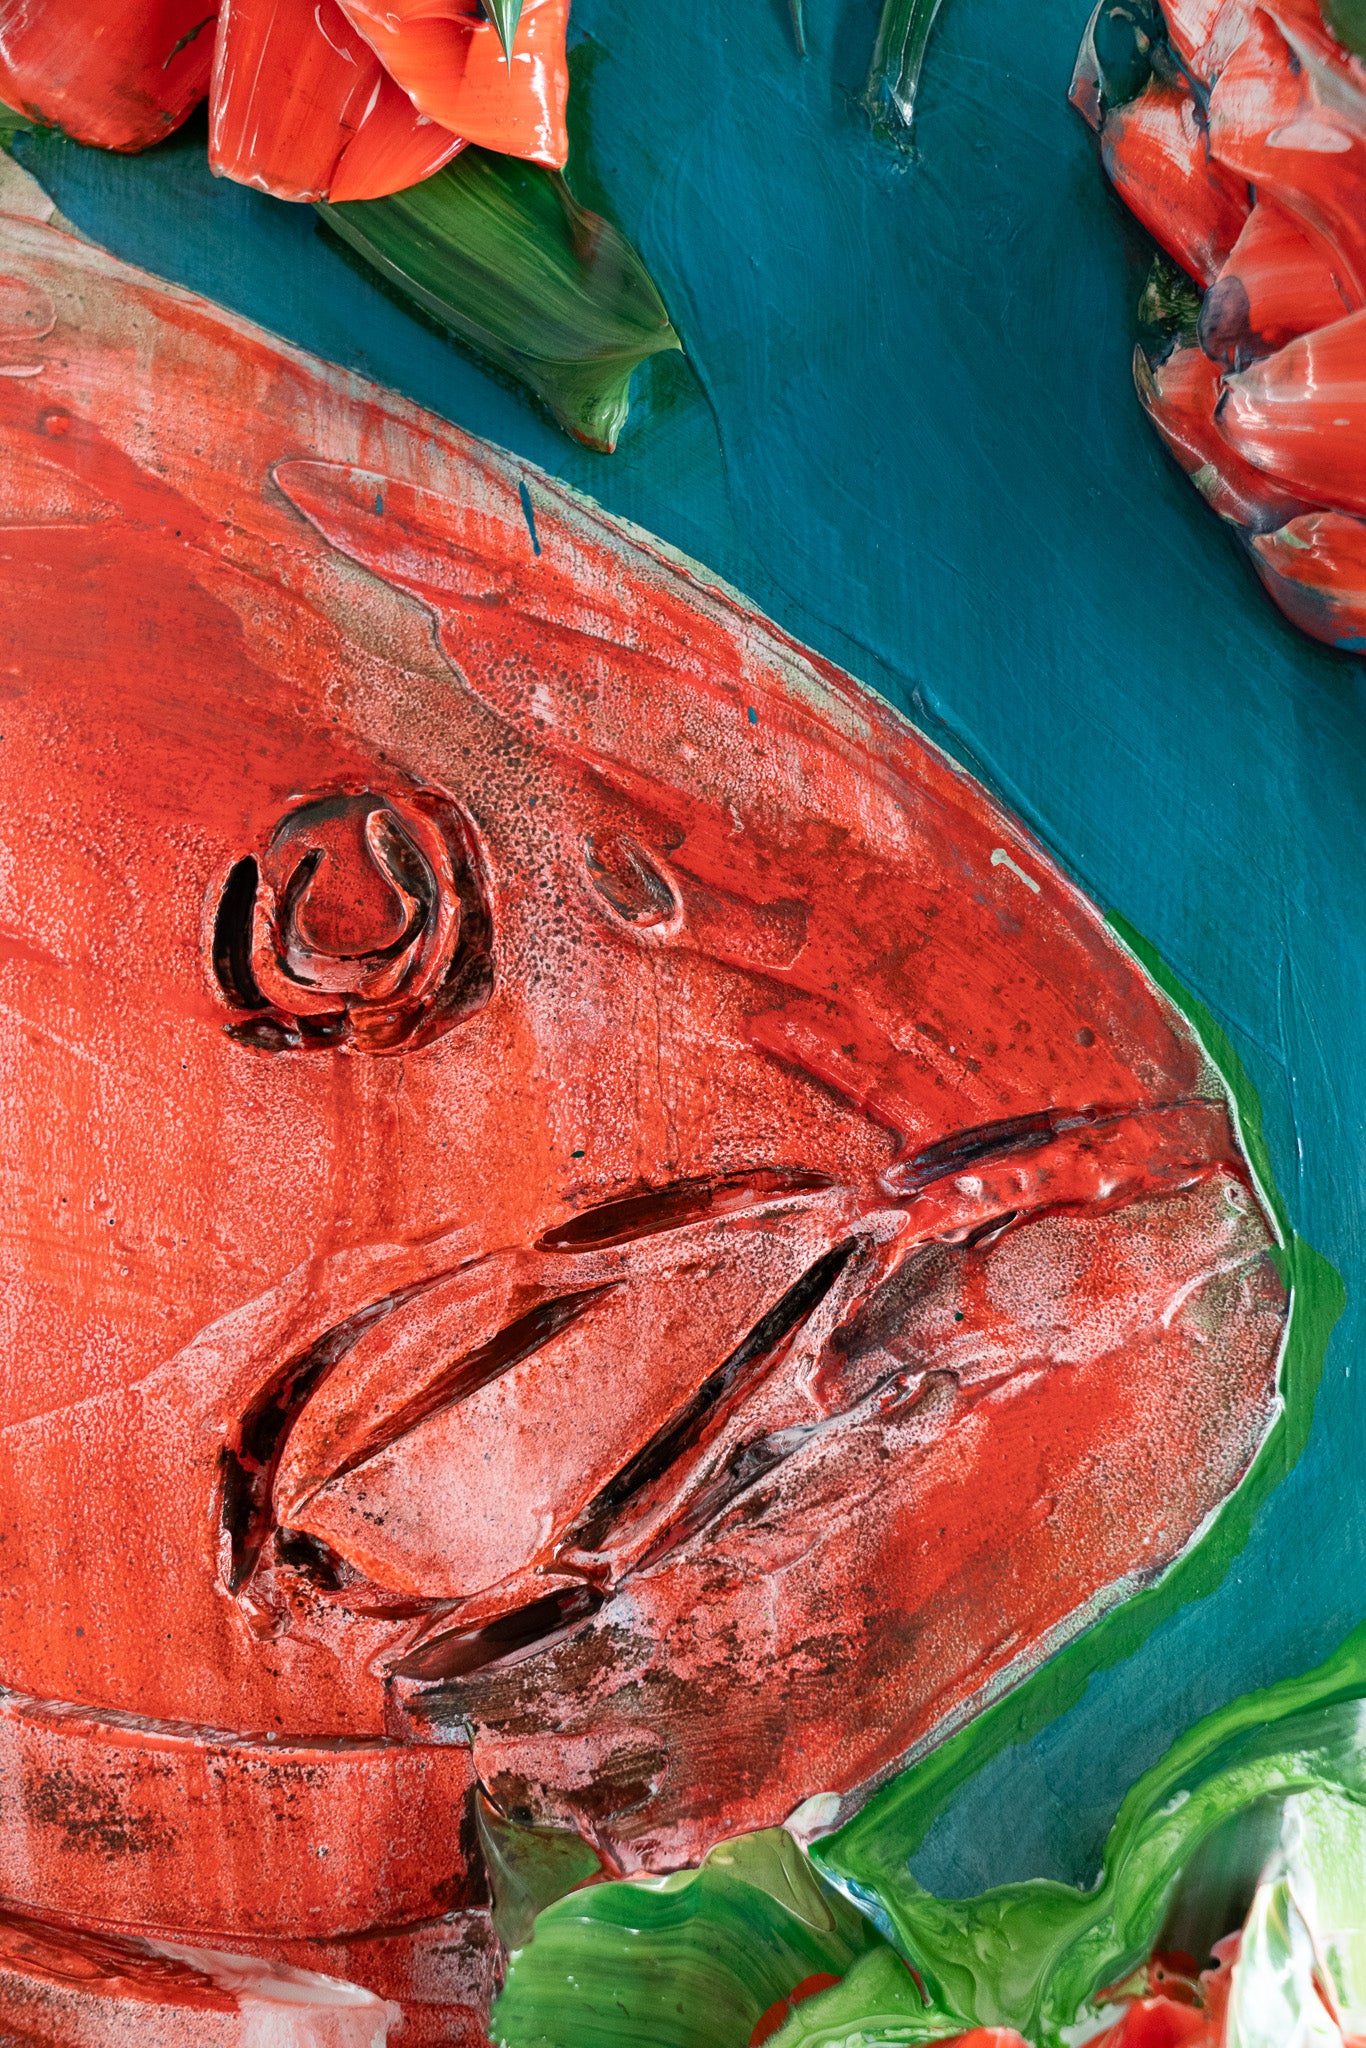 Floral Redfish, 36x36